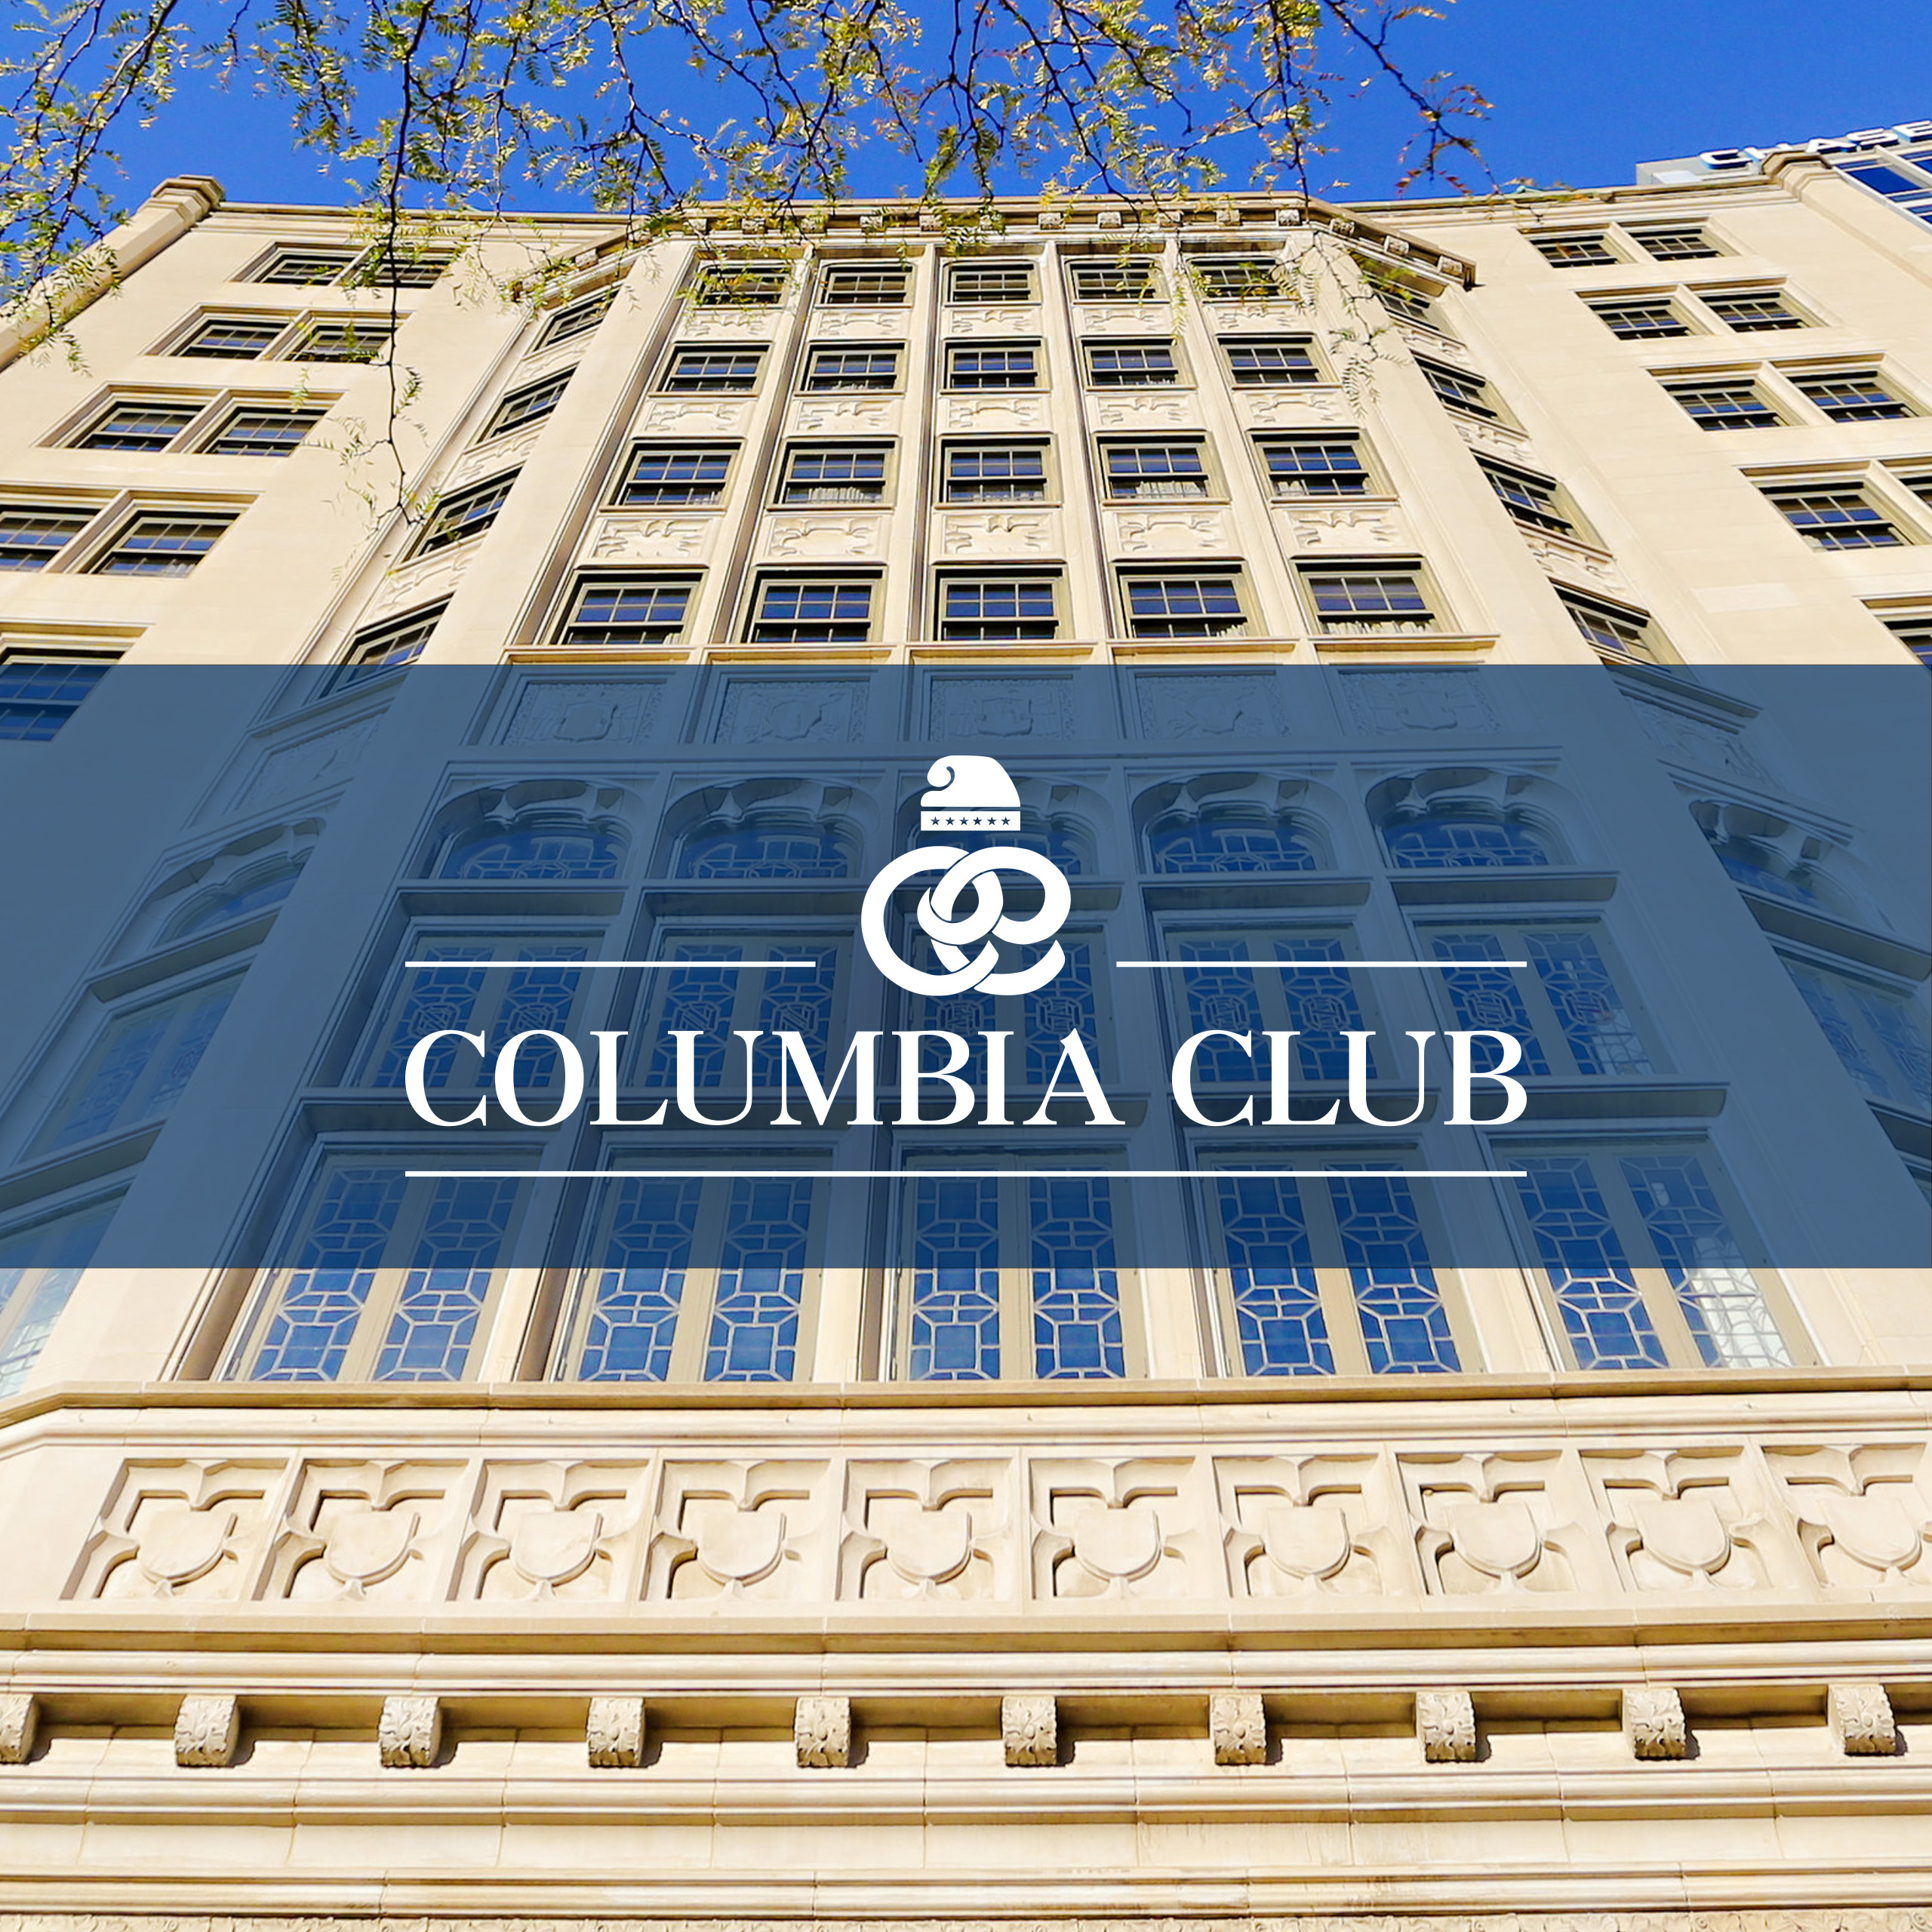 Columbia Club